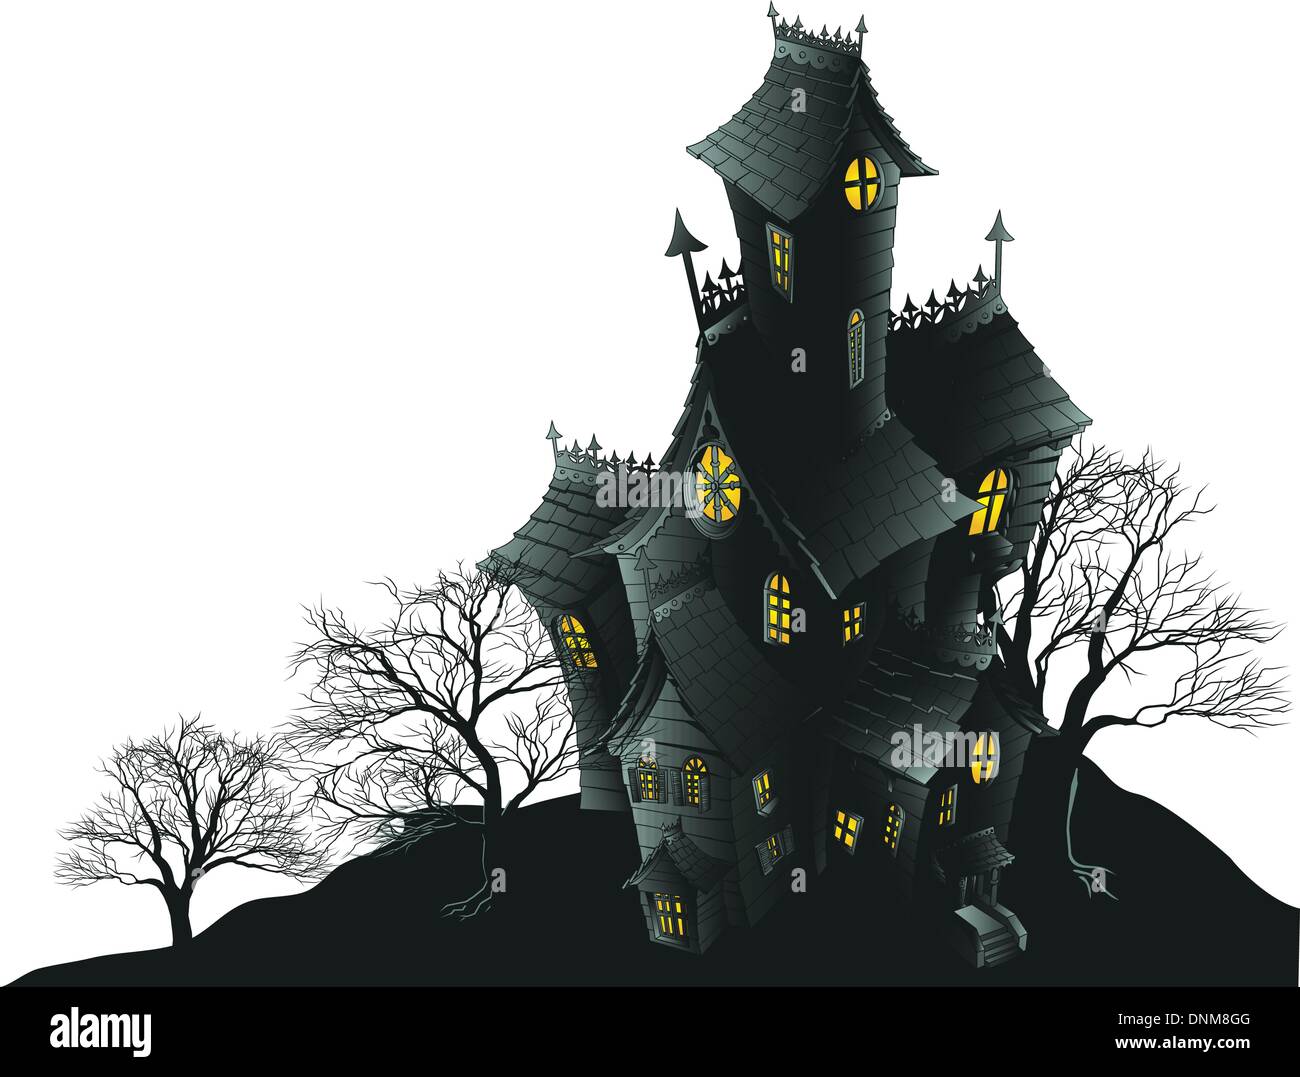 Abbildung eines Hauses spukt Gespenst Stock Vektor